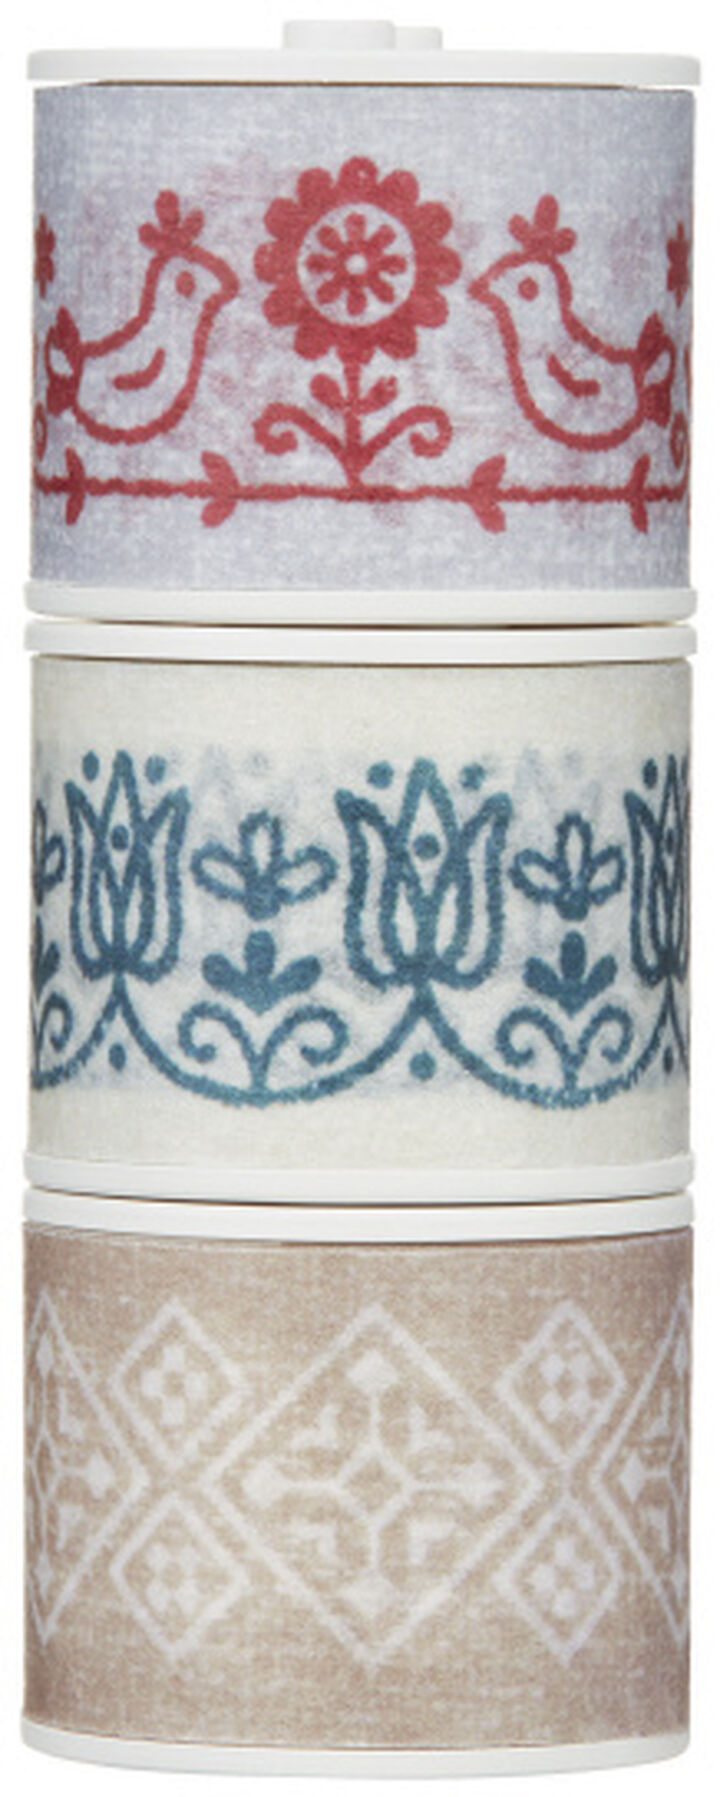 Bobbin Washi Tape Embroidery Set of 3,Embroidery, medium